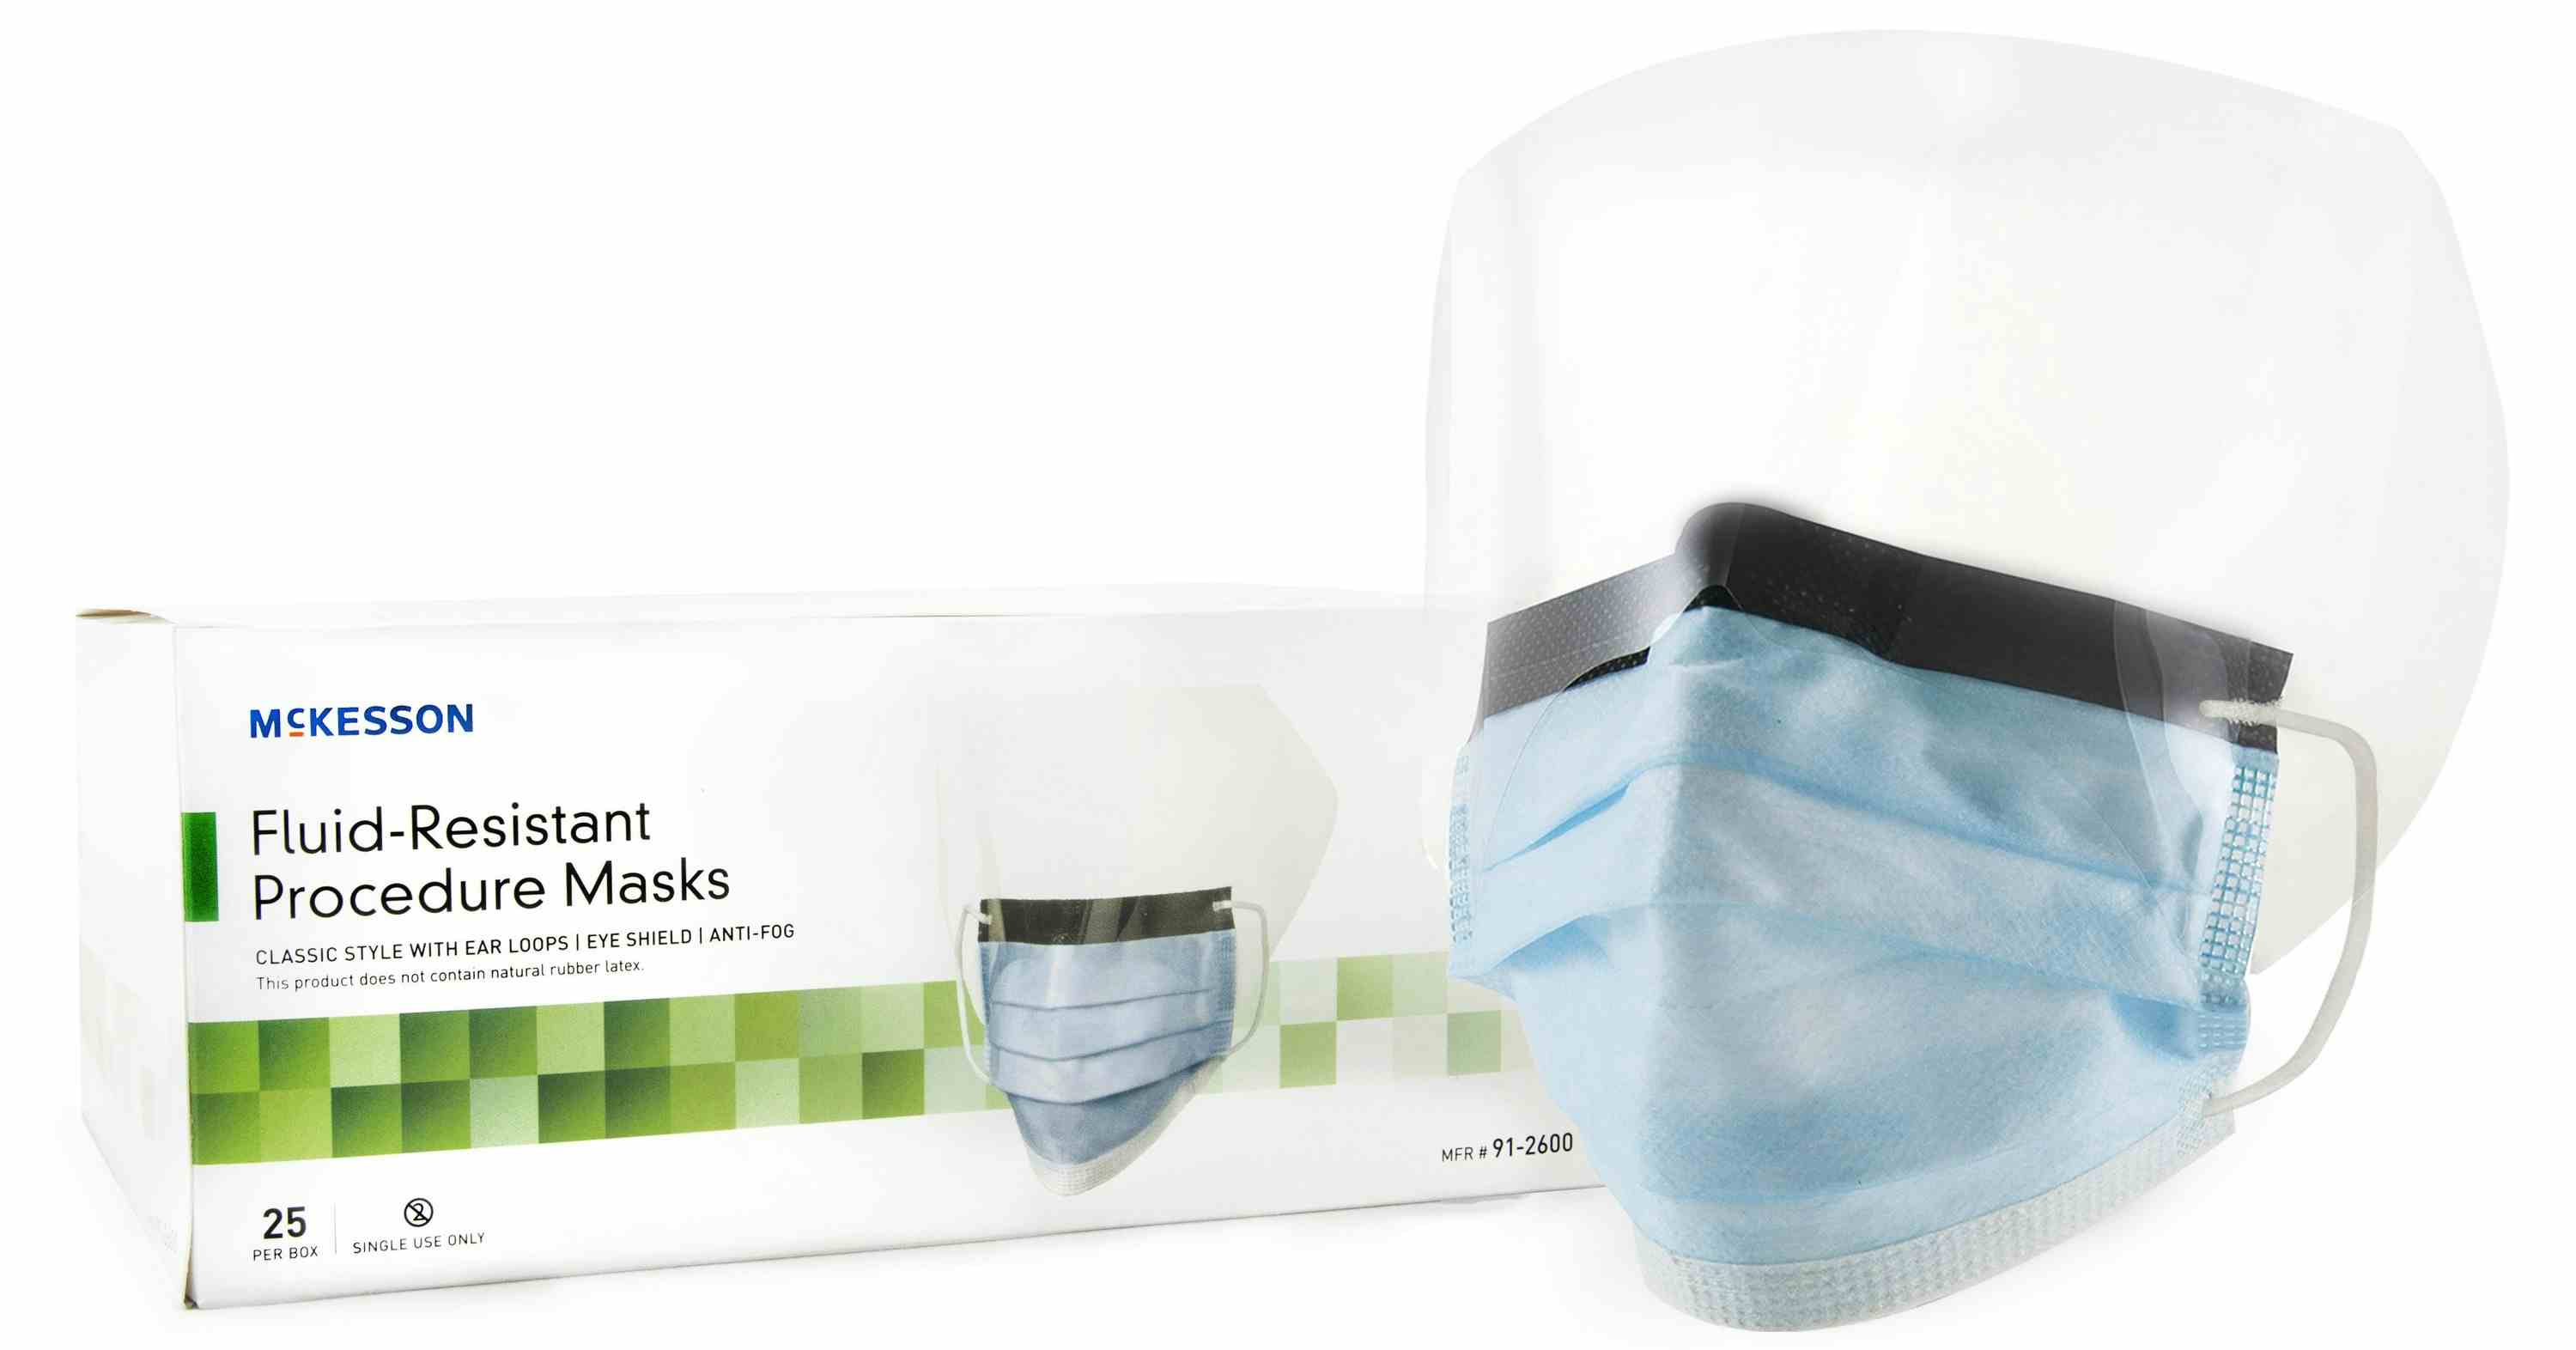 McKesson Fluid-Resistant Procedure Masks with Eye Shield, Earloops, 91-2600, Box of 25